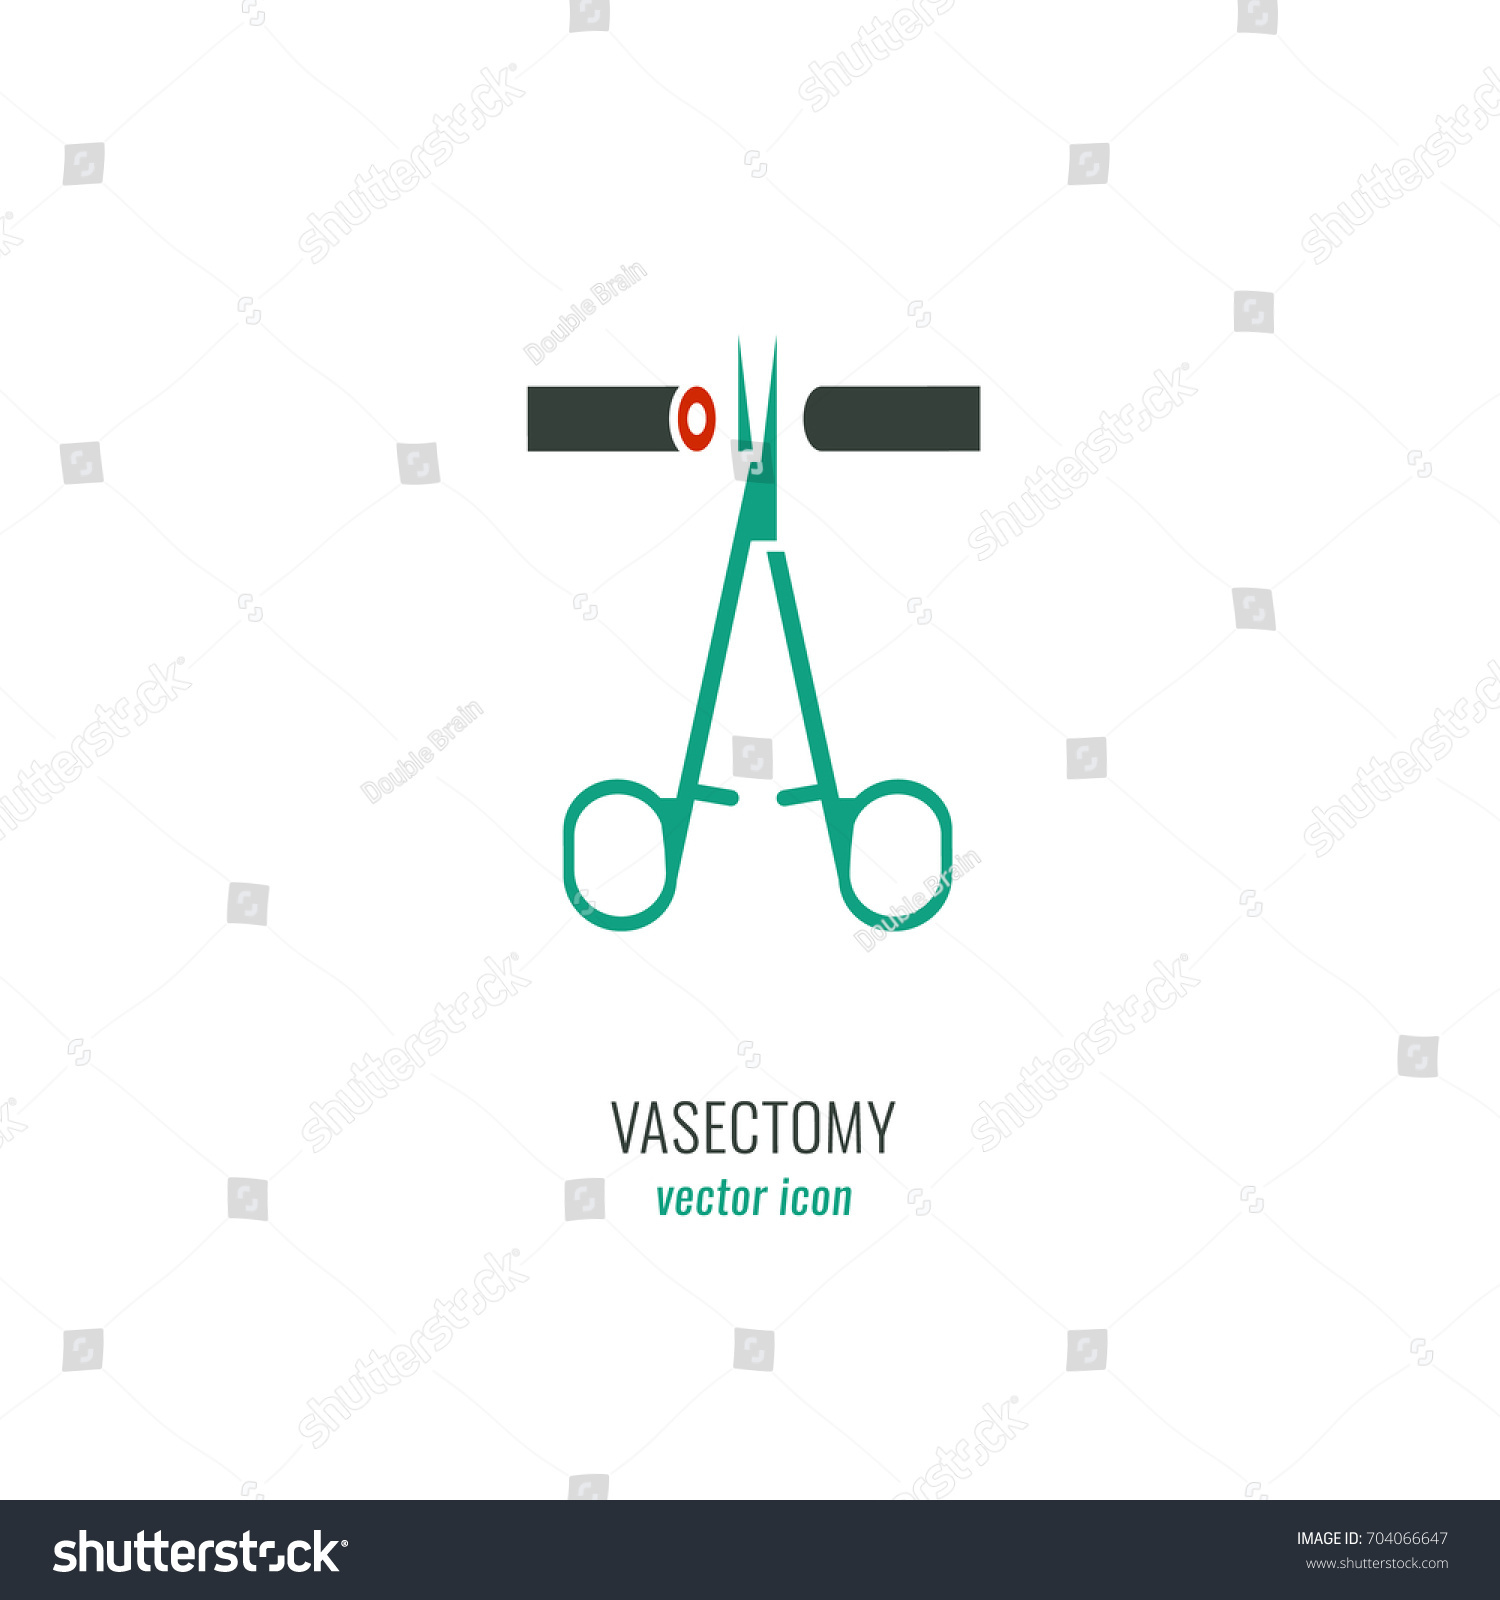 Man Contraception Pictogram Vasectomy Icon Green เวกเตอร์สต็อก ปลอดค่าลิขสิทธิ์ 704066647